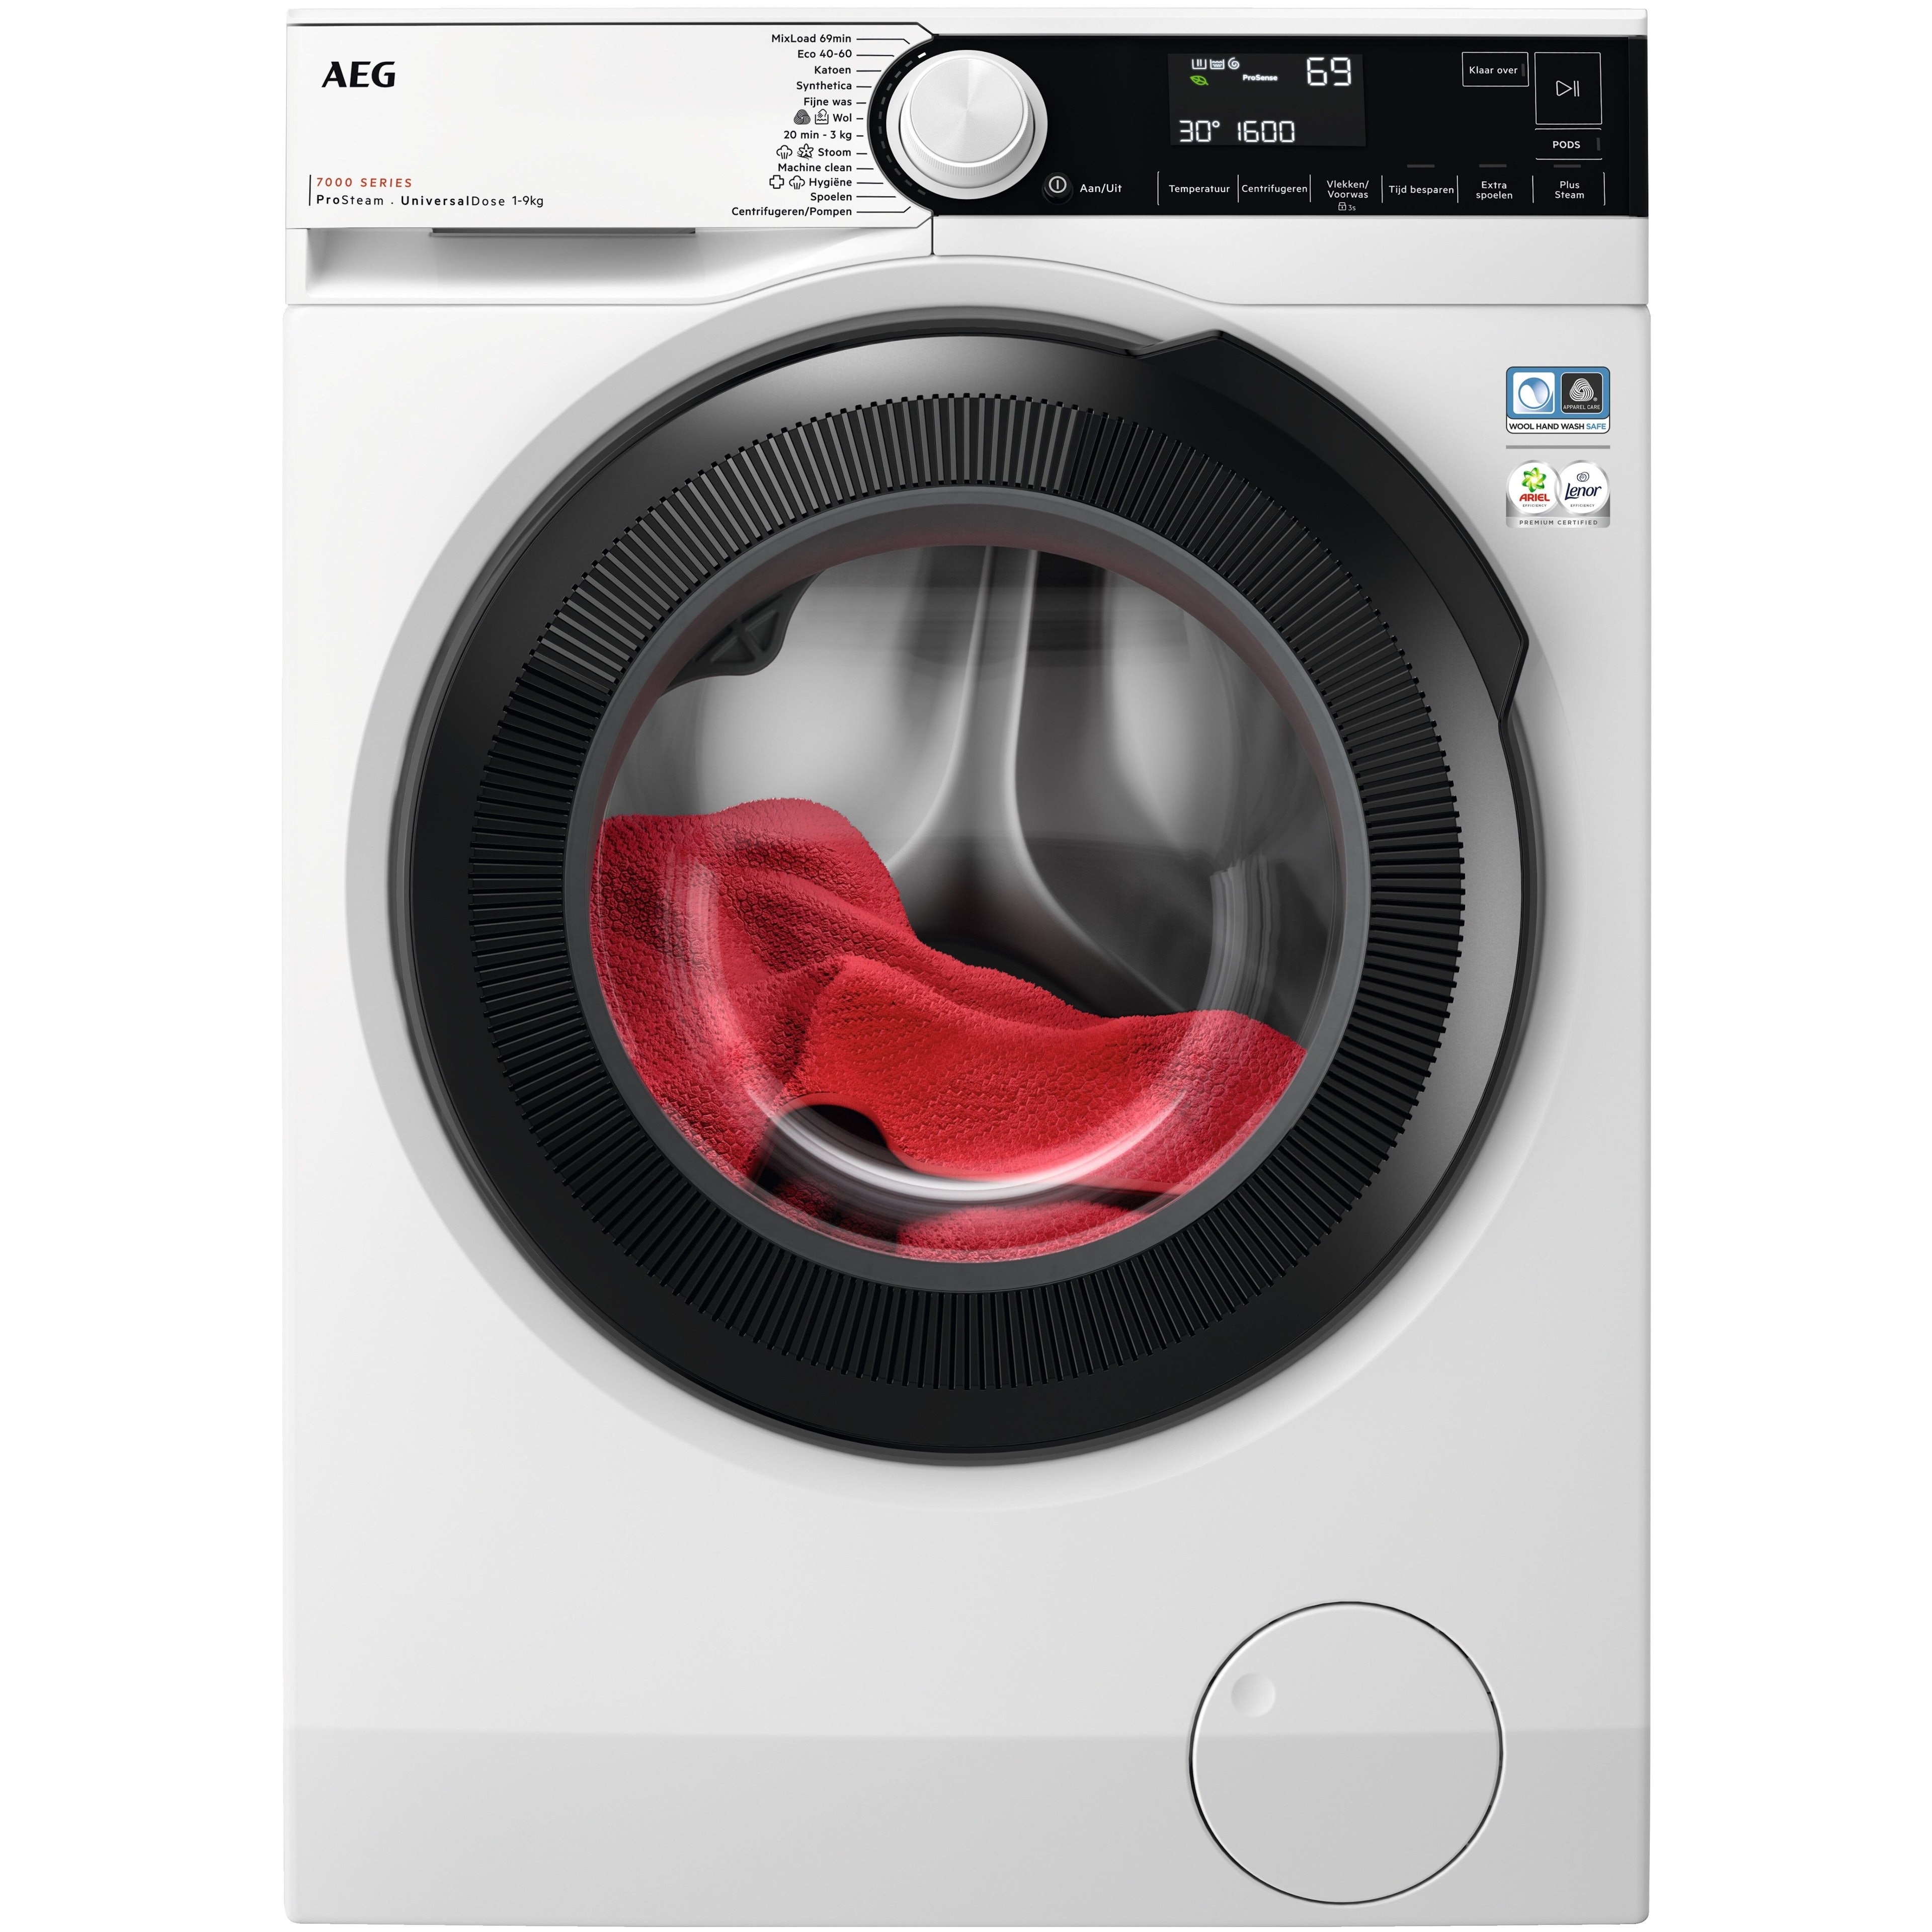 AEG LR7596UD4 wasmachine afbeelding 1